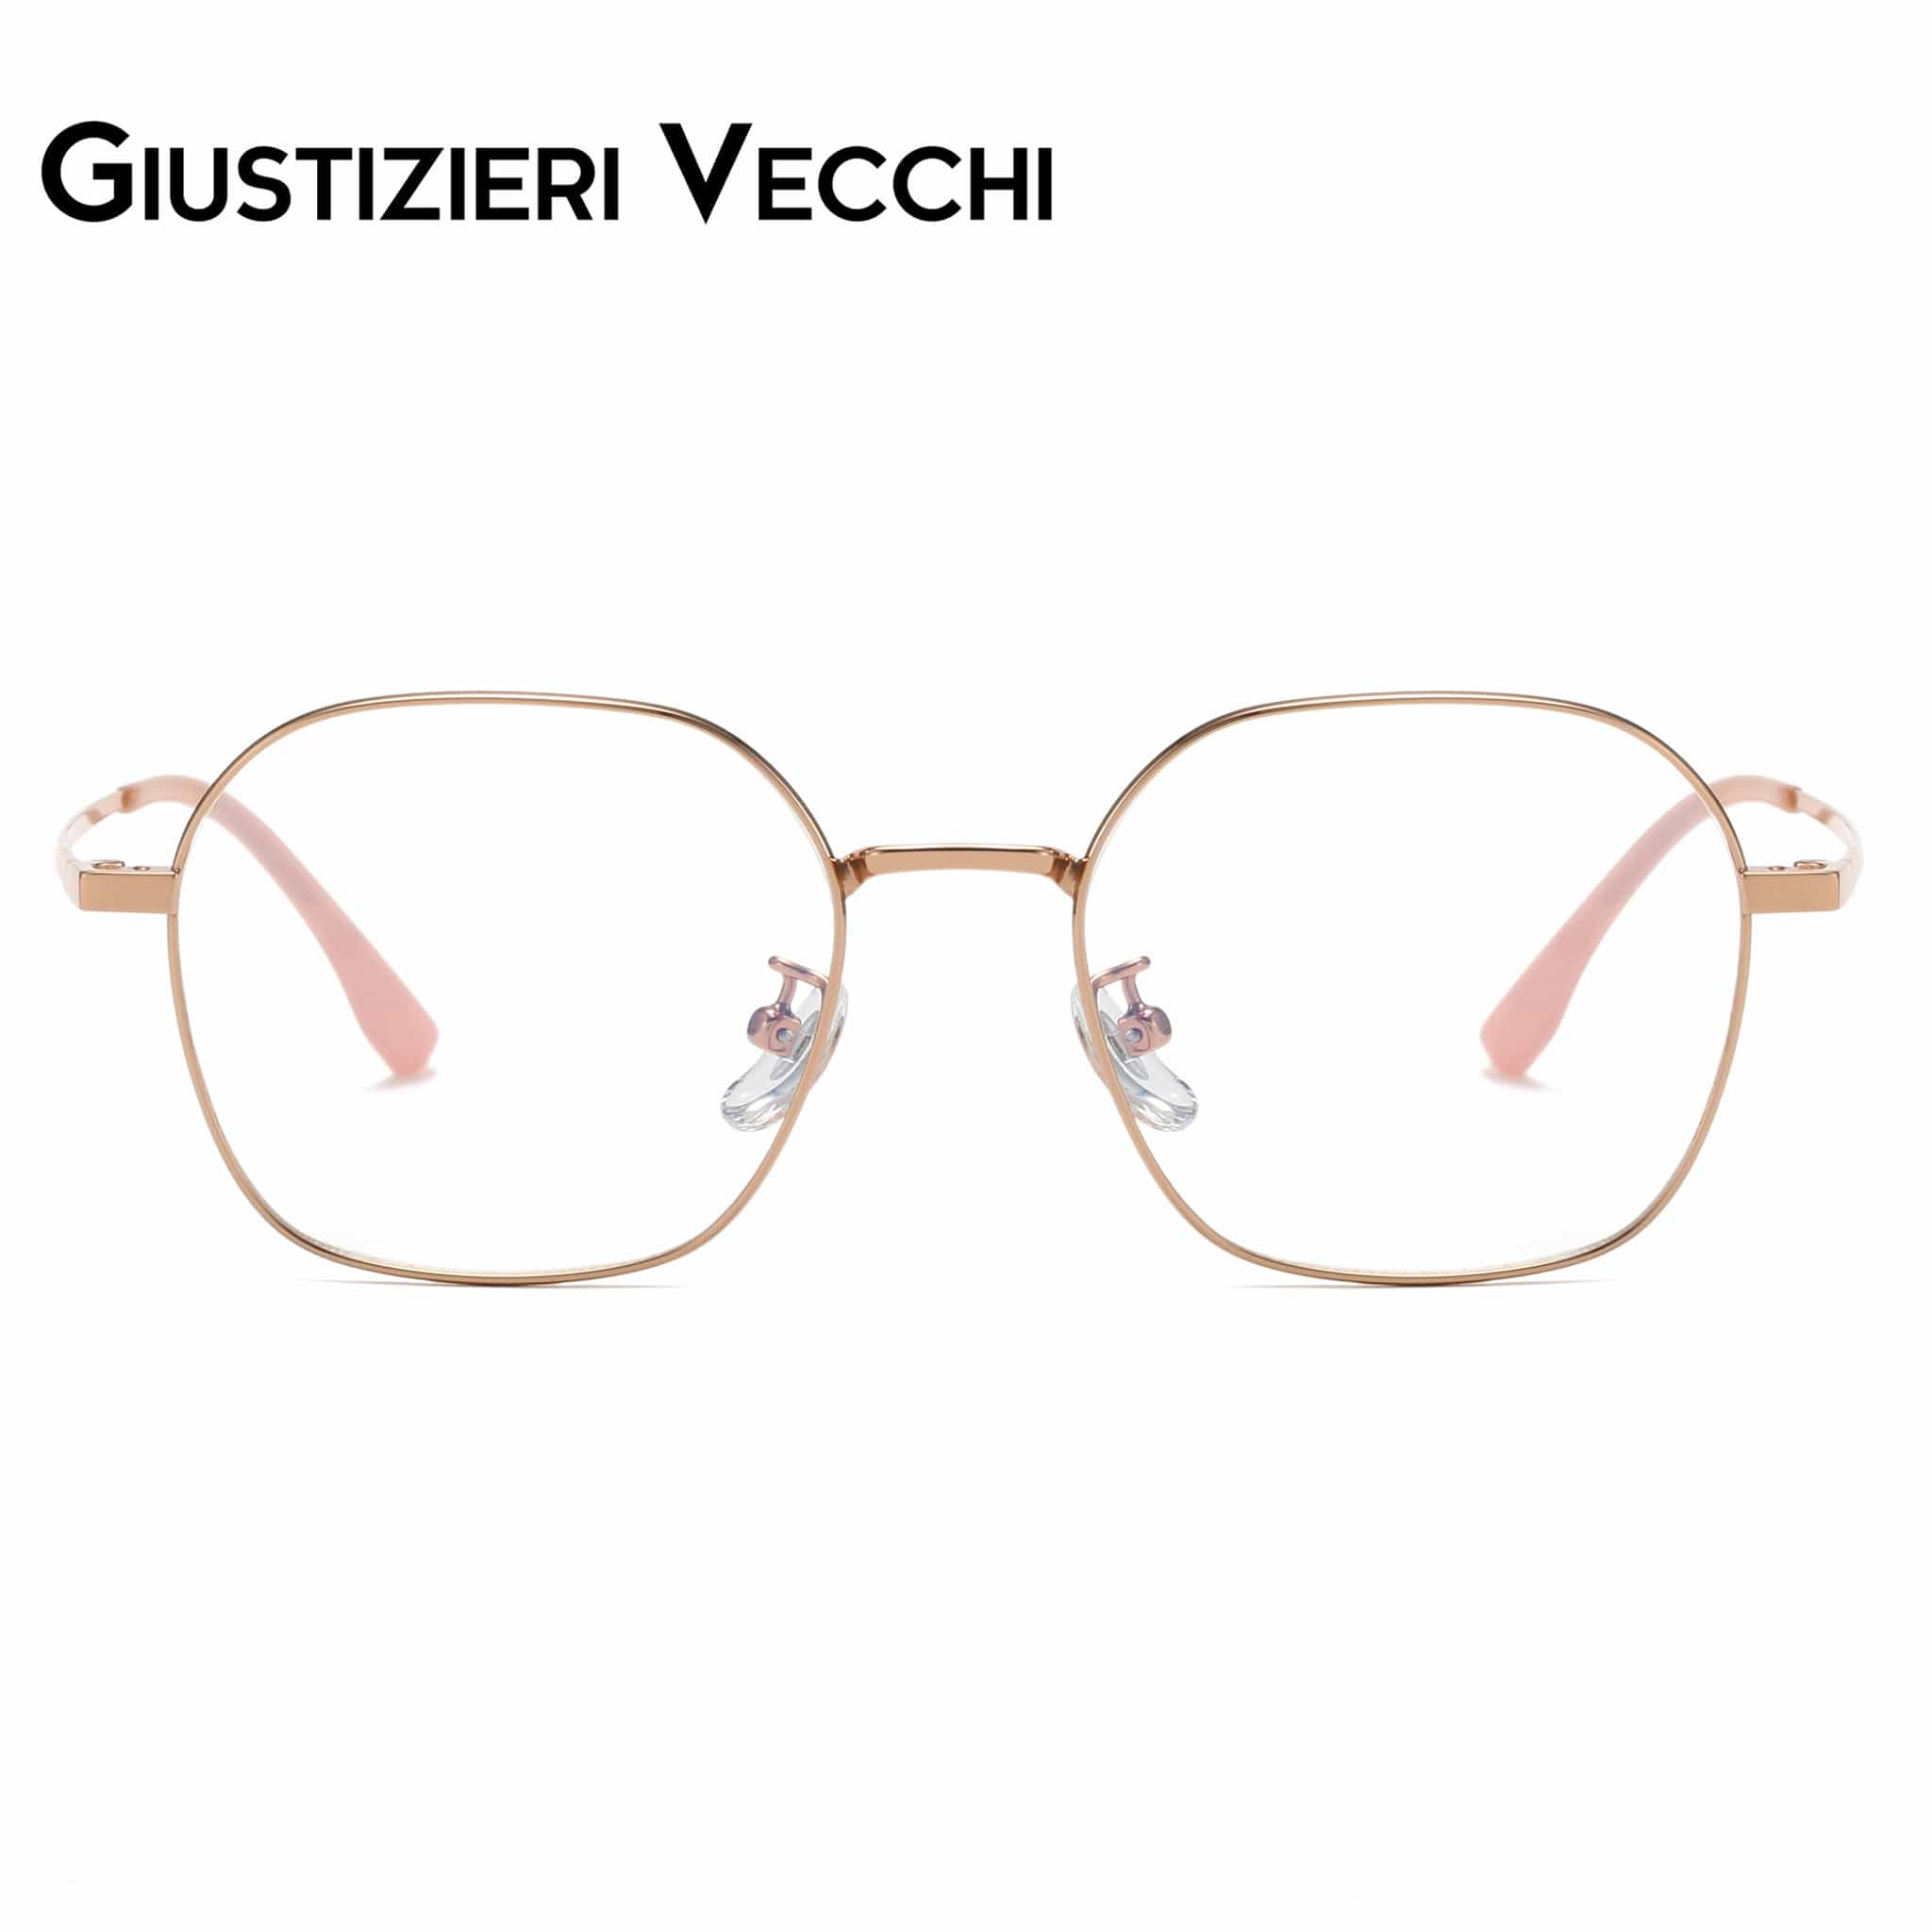 GIUSTIZIERI VECCHI Eyeglasses Small / Rose Gold Mystic Mist Duo